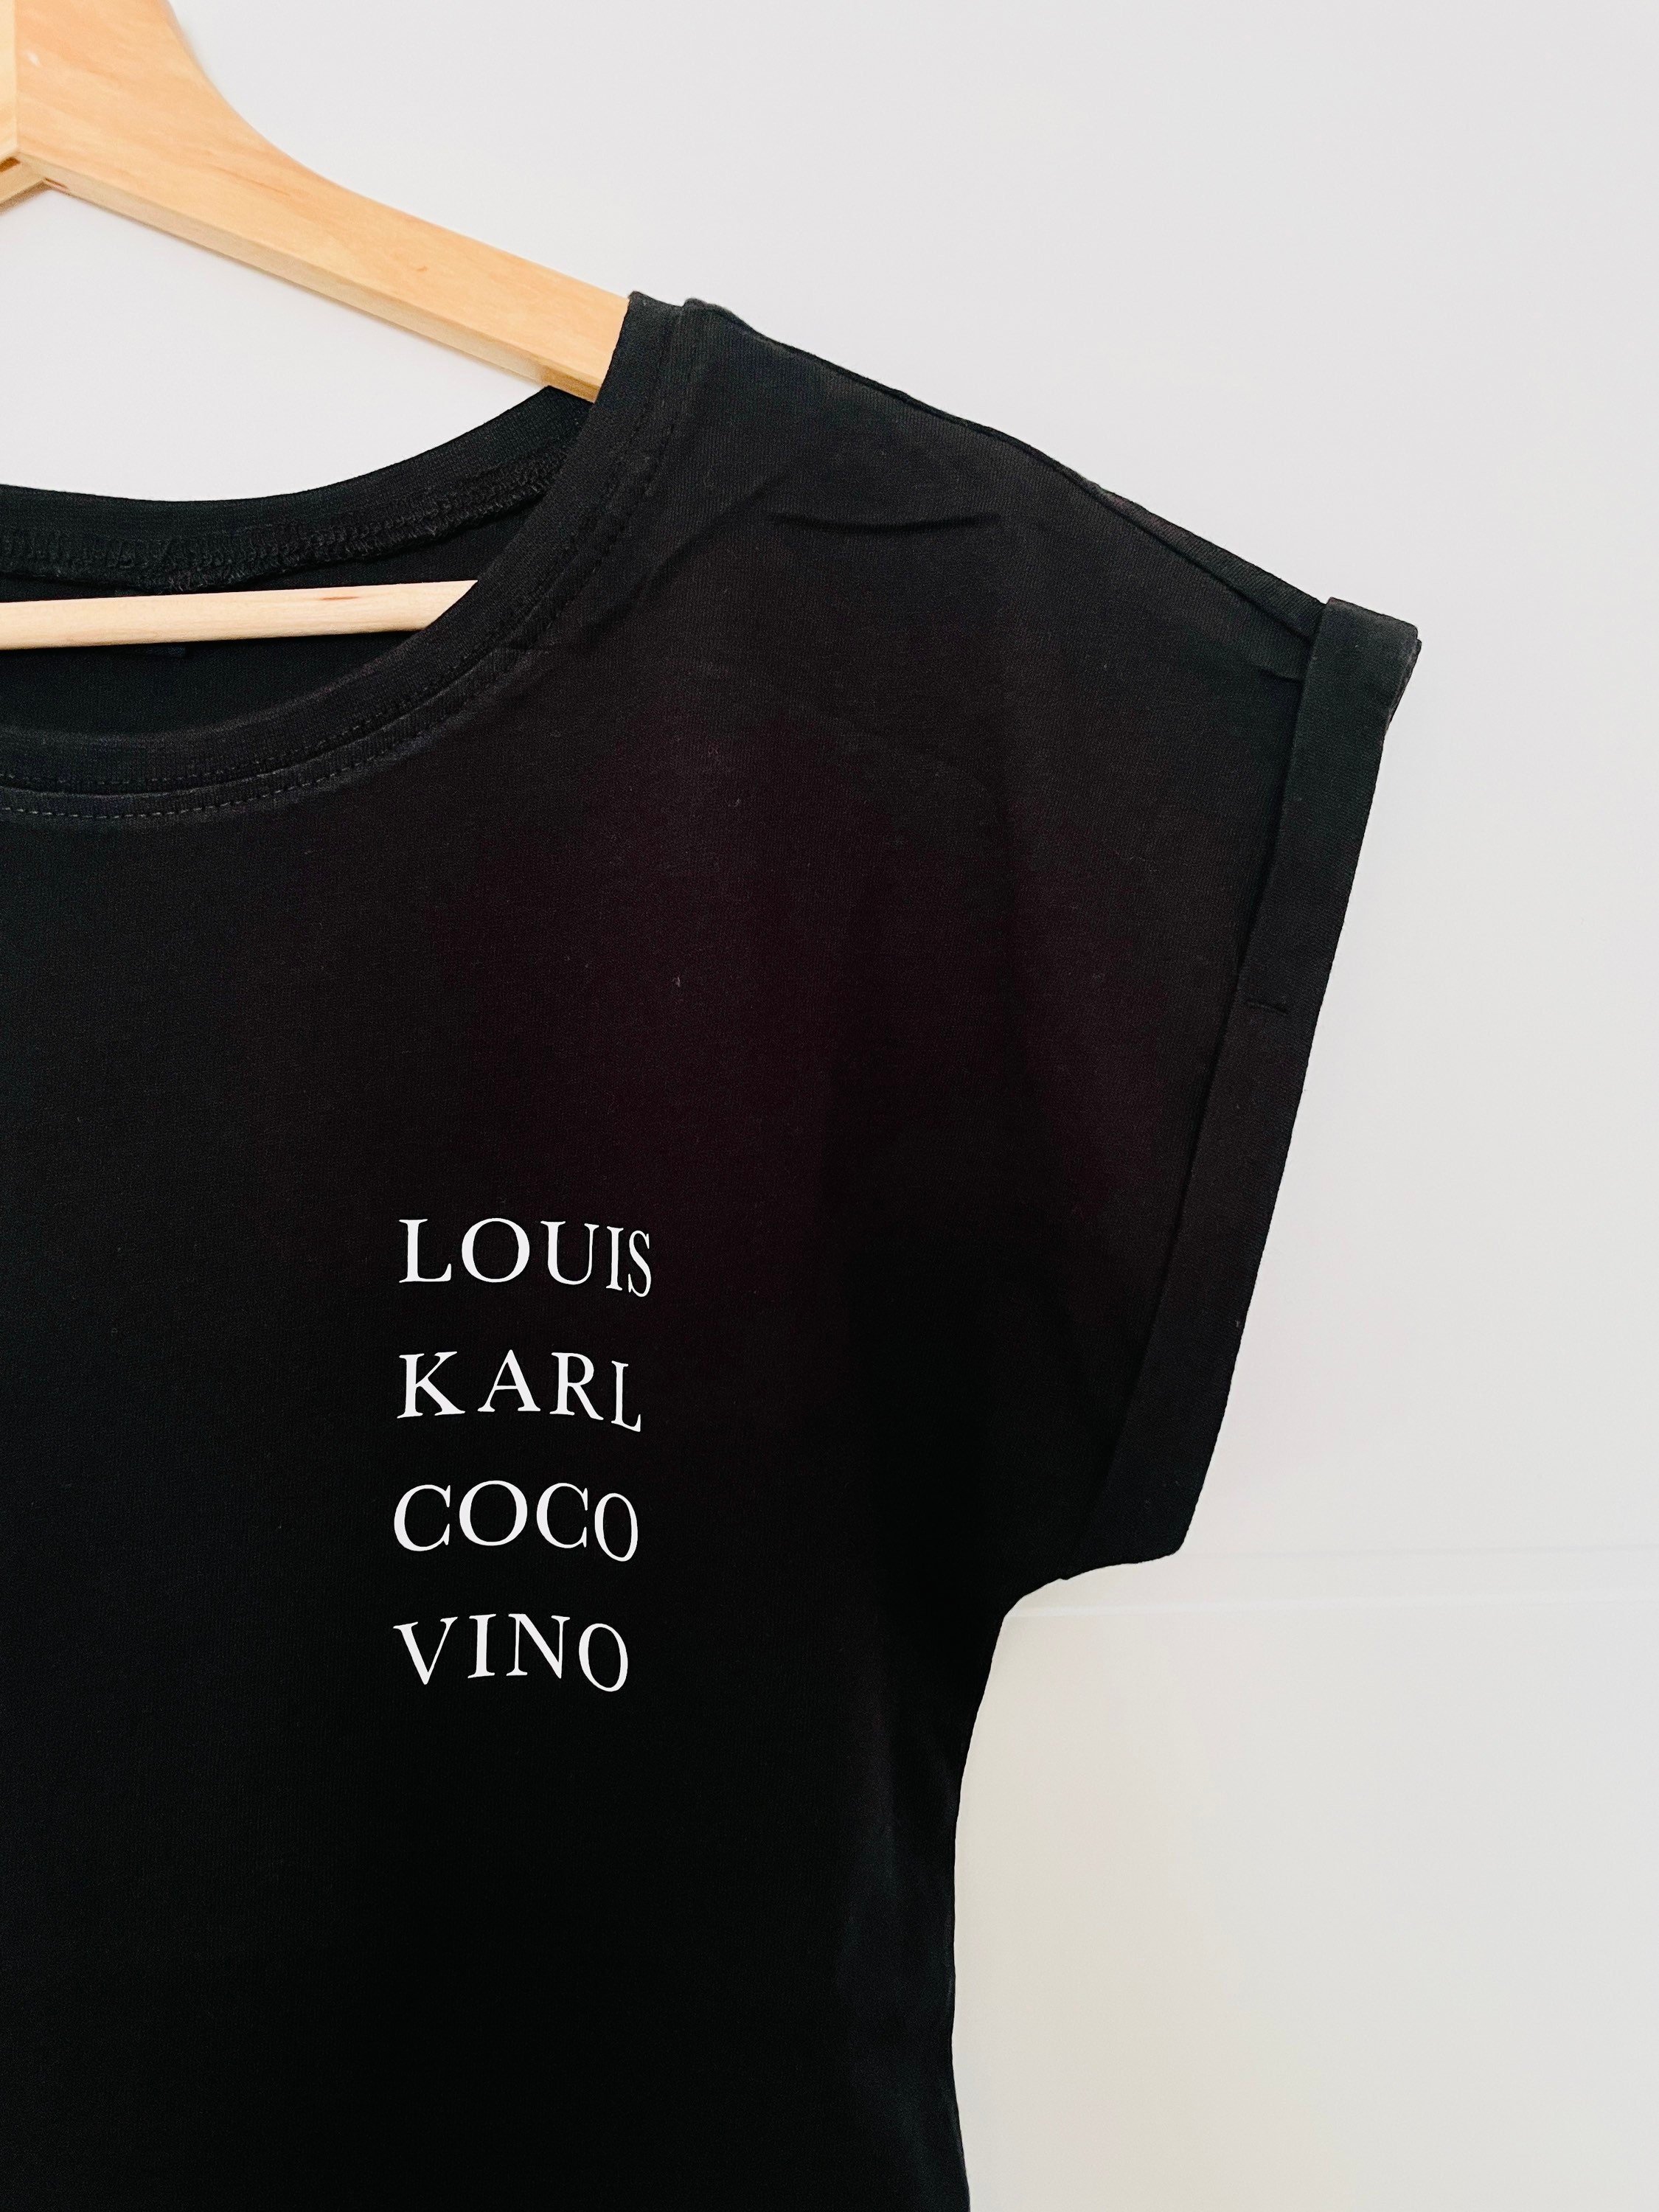 Louis Karl Coco Vino T-shirt Fashion Shirt Women's 